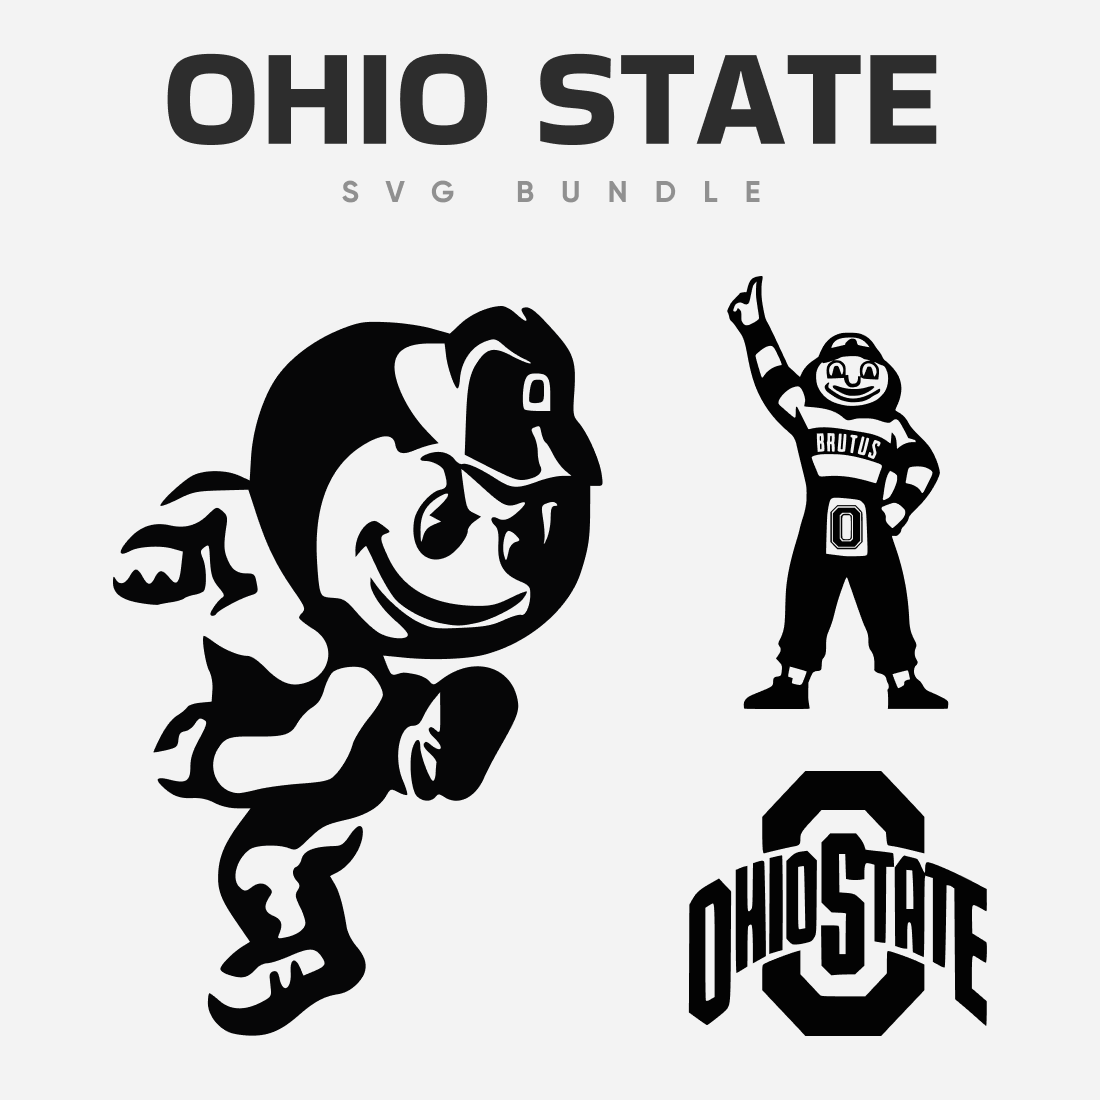 Interesting Ohio state SVG bundle.